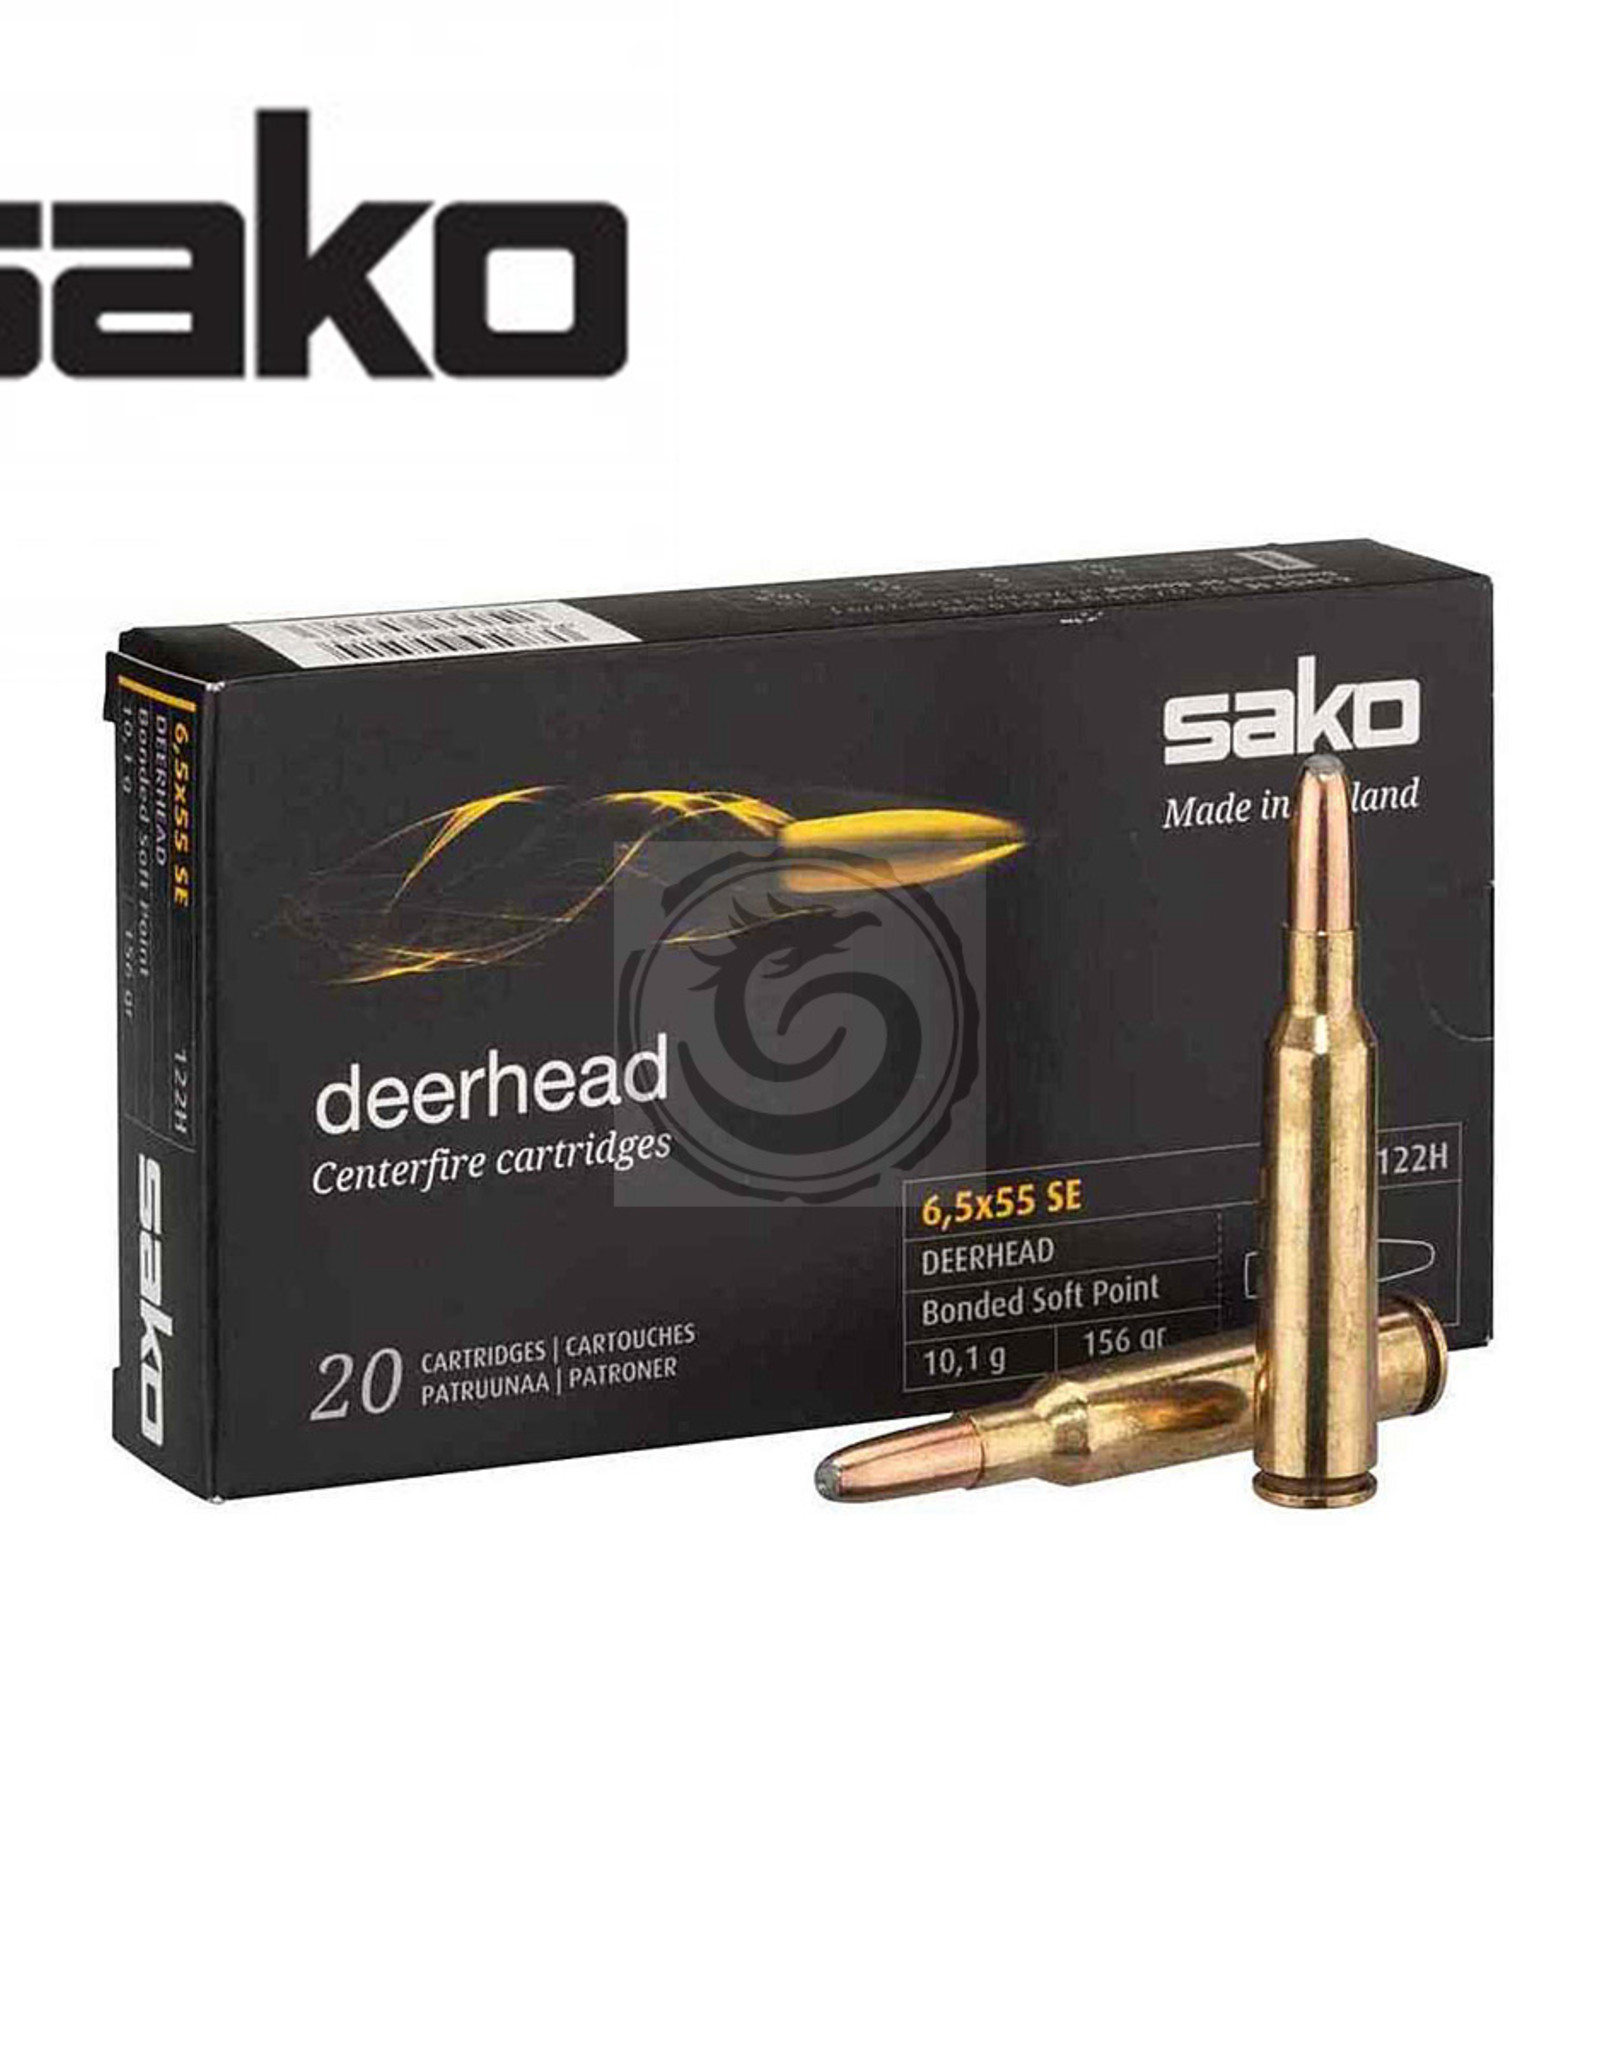 Sako Deerhead Bonded Soft Point